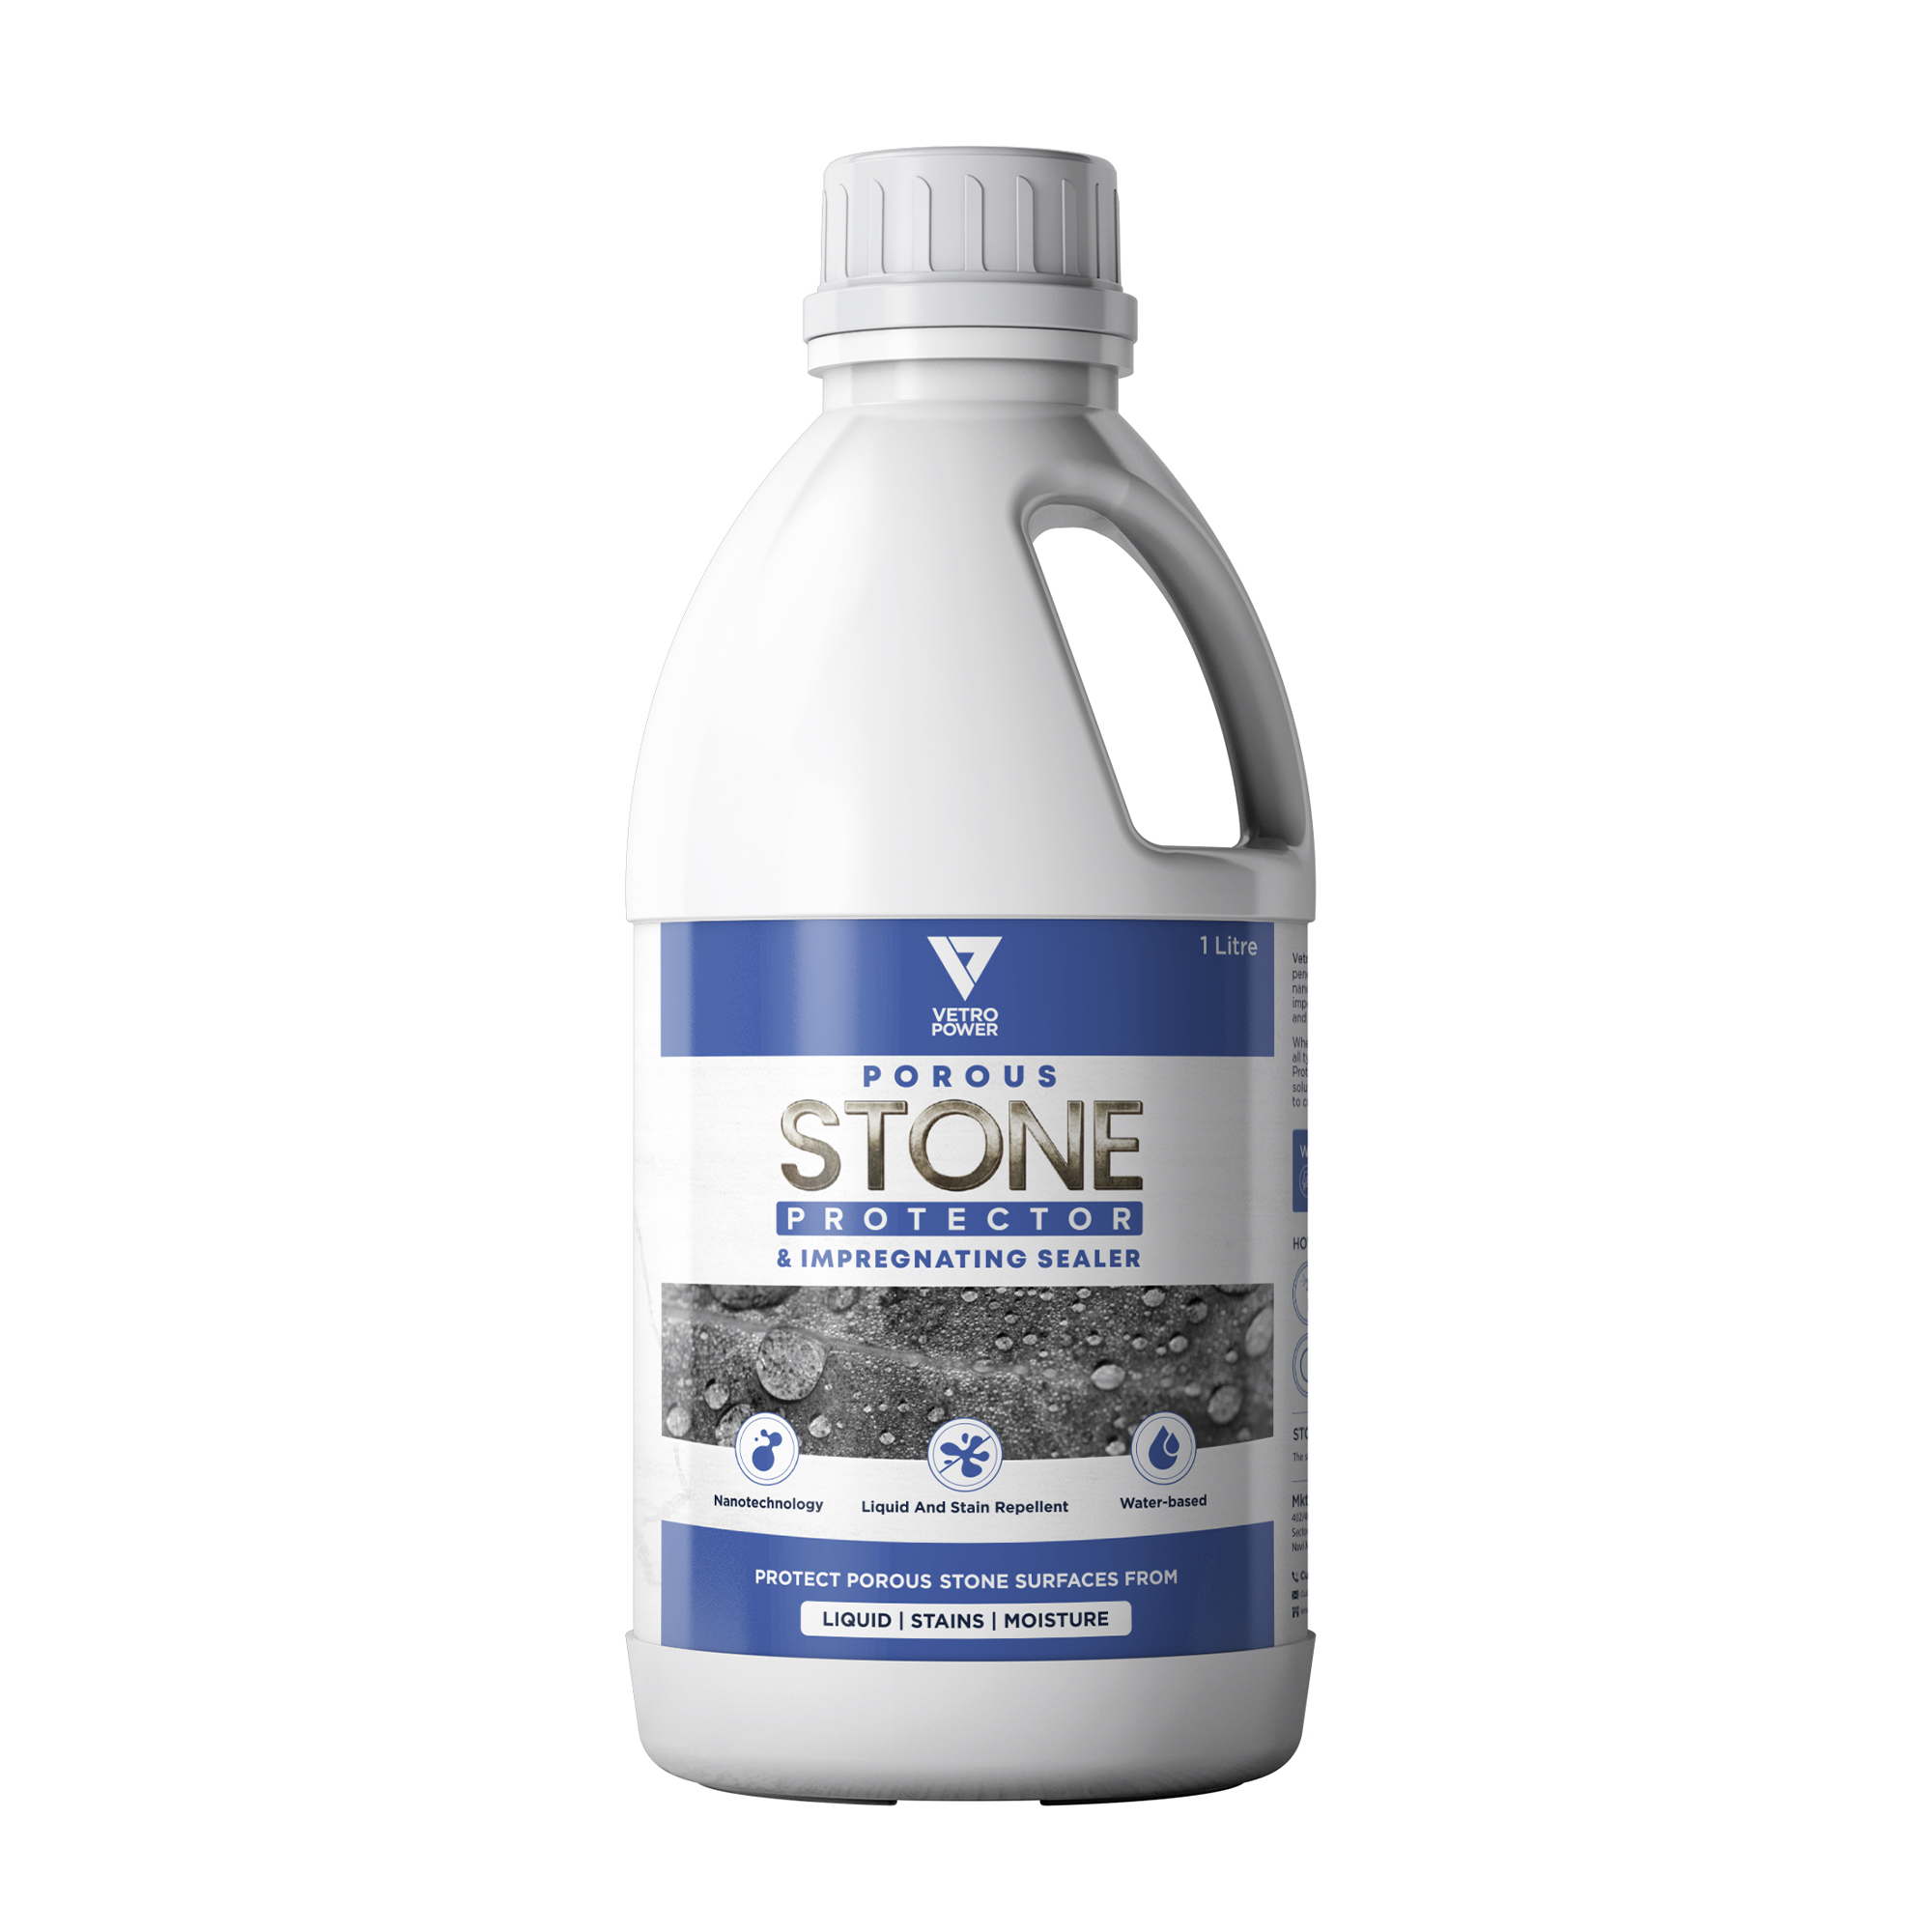 Vetro Power Porous Stone Protector Spray and Impregnating Sealer